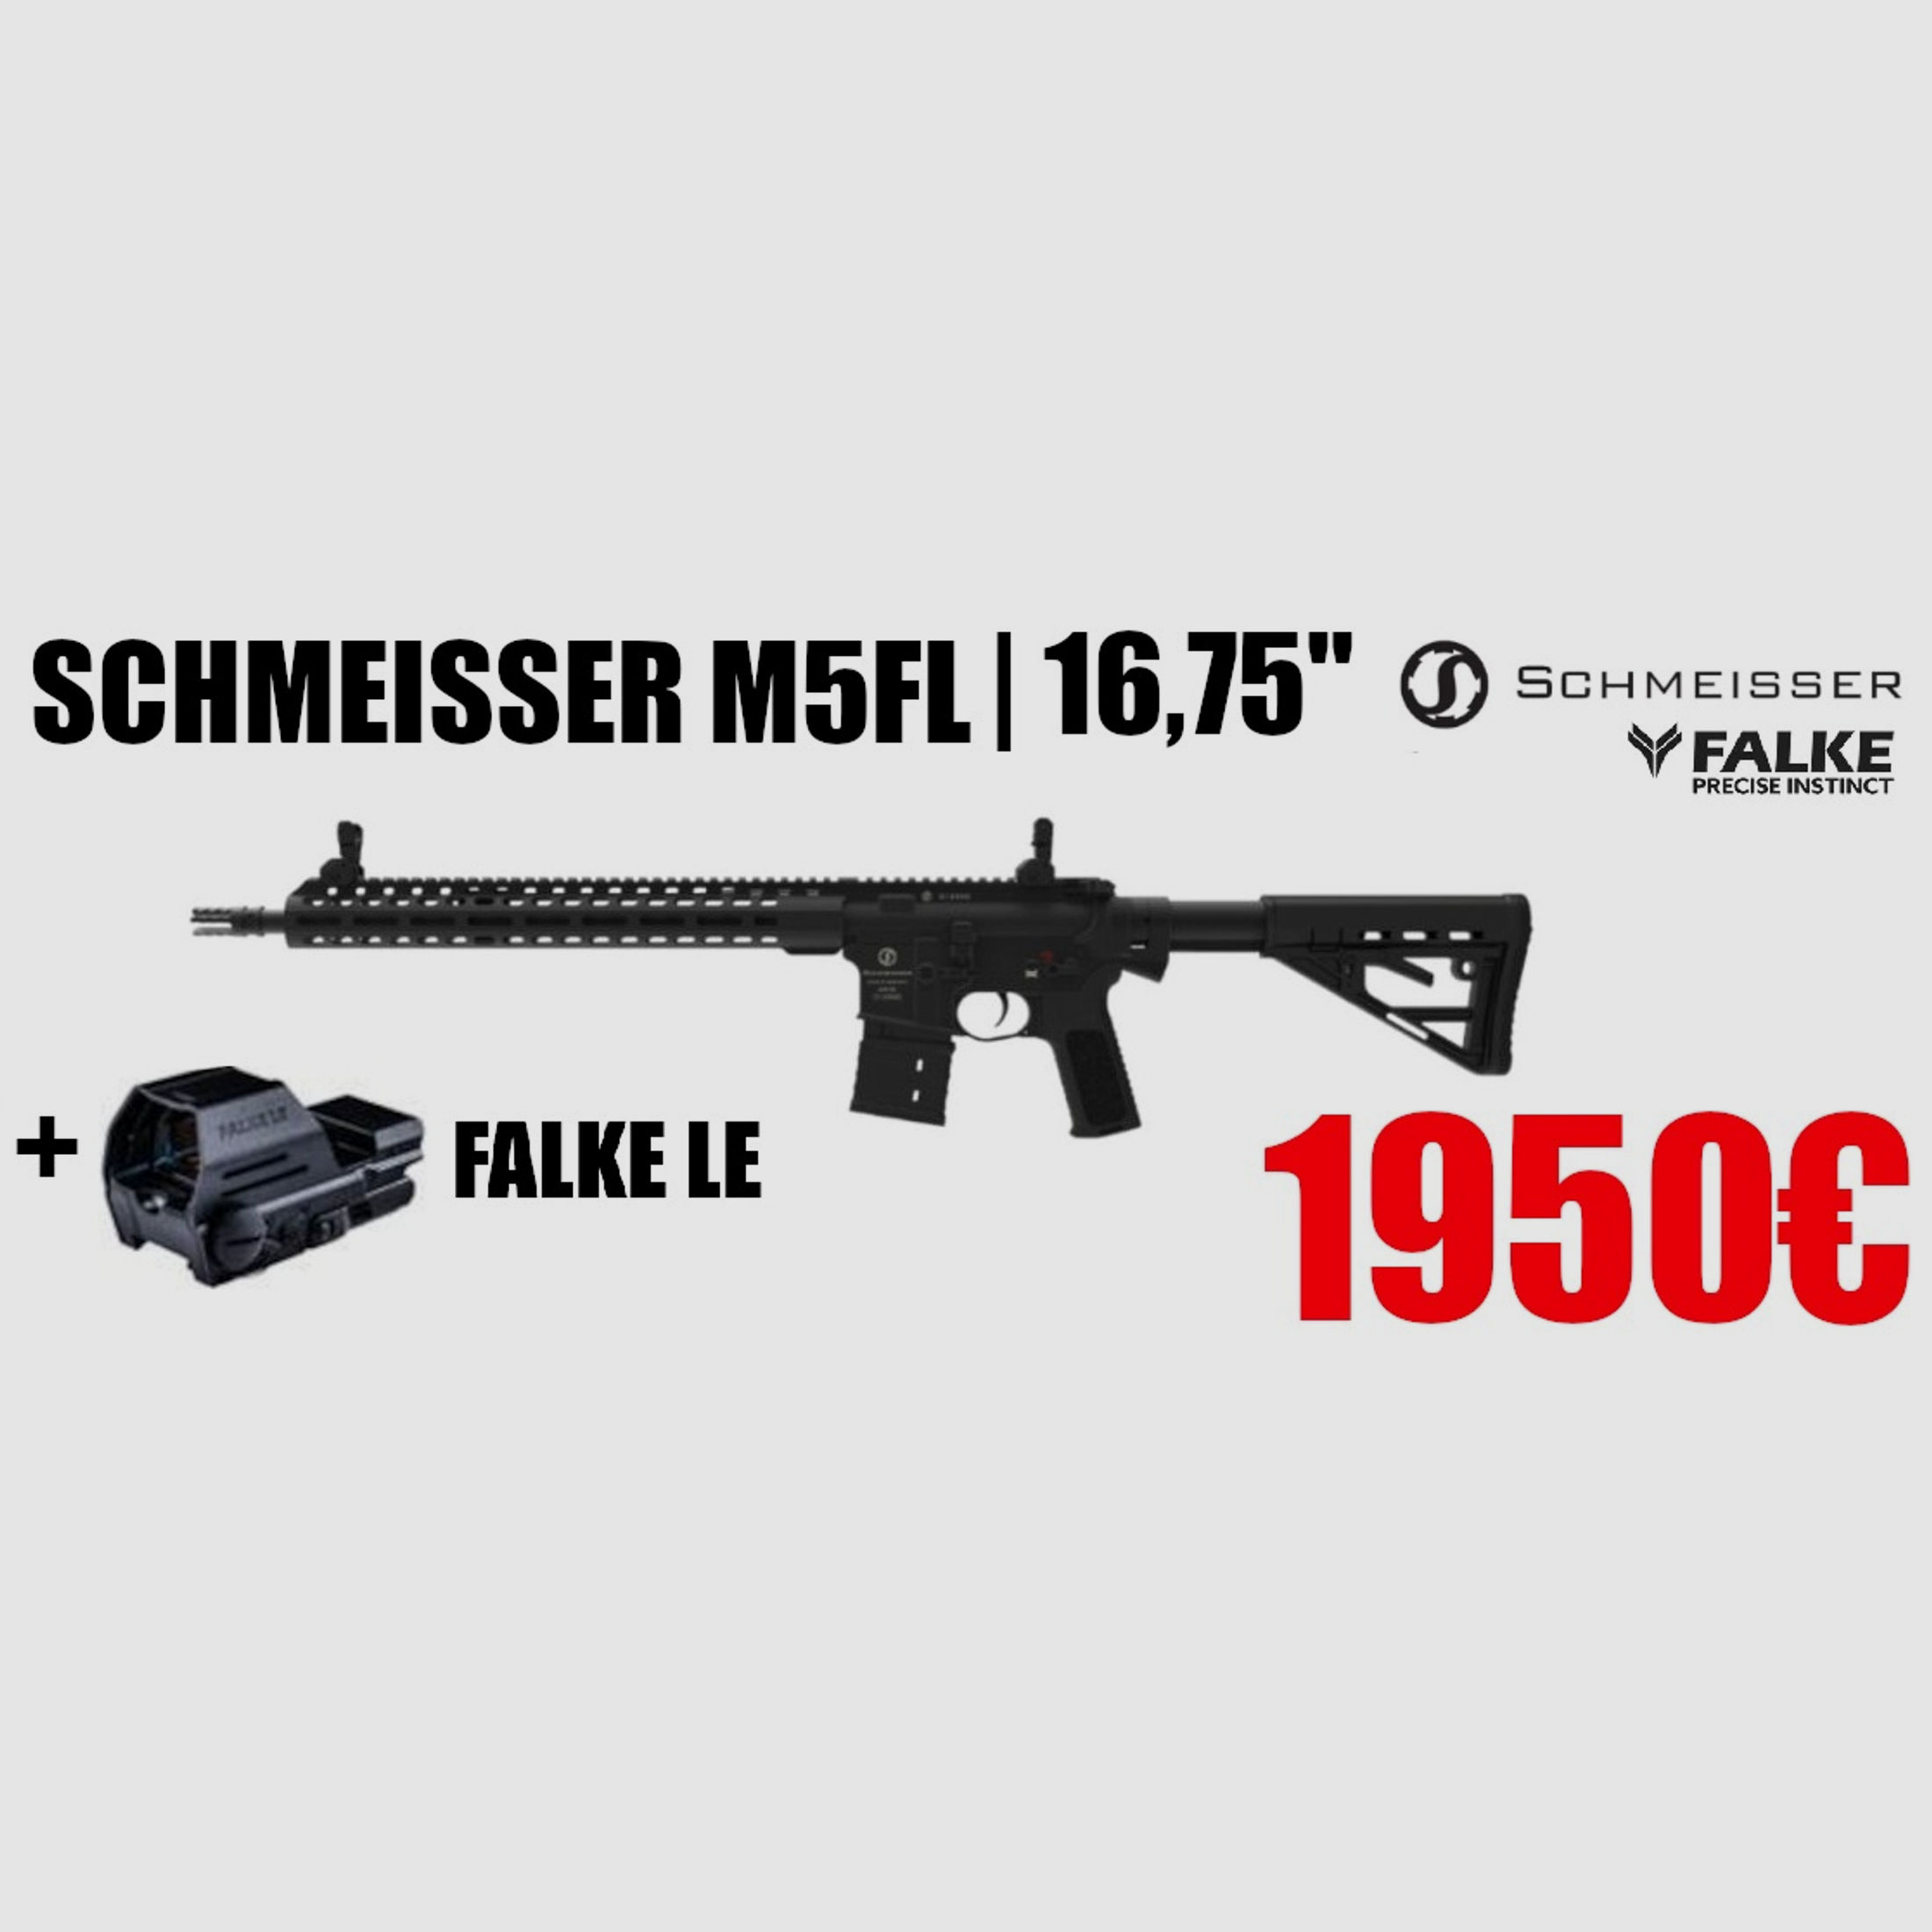 Schmeisser M5FL AR15 223Rem 16,75" LL + Falke LE im Frühjahrsangebot UVP: 2850€